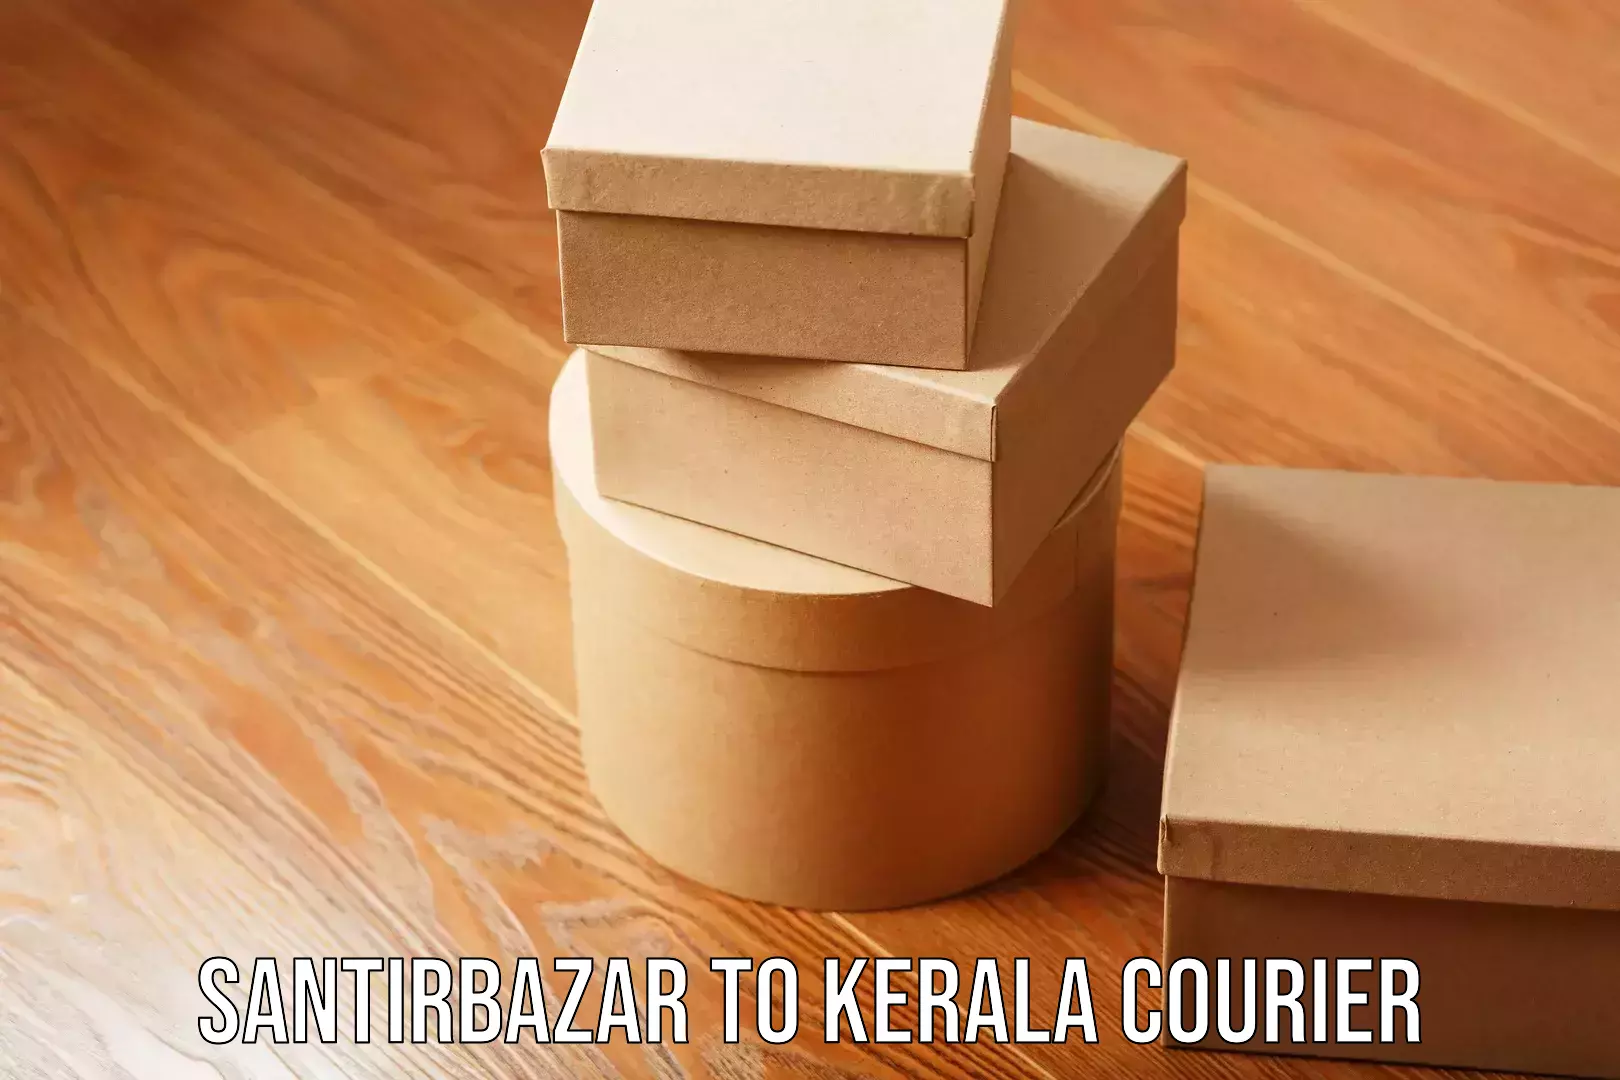 User-friendly delivery service Santirbazar to Kerala